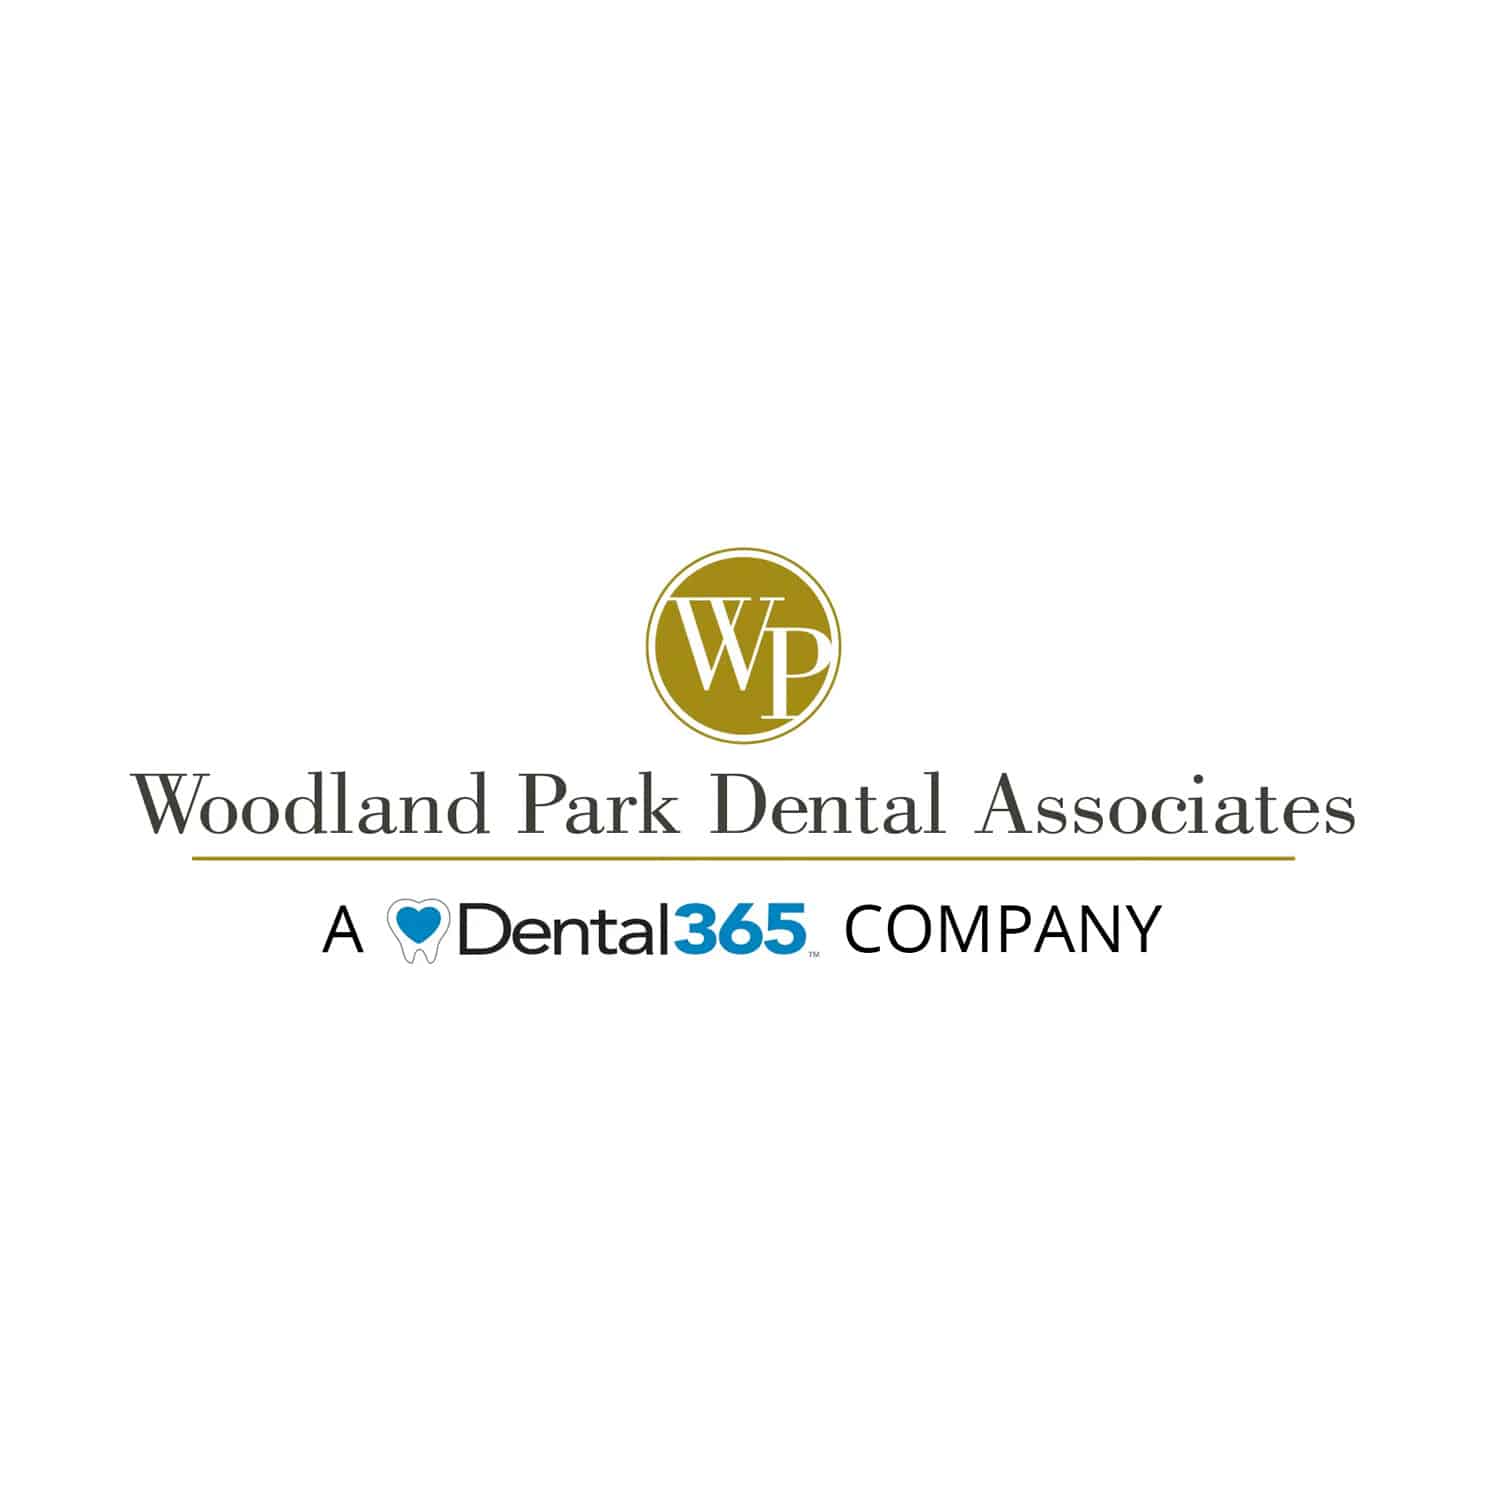 Dental365 Welcomes Woodland Park Dental Associates